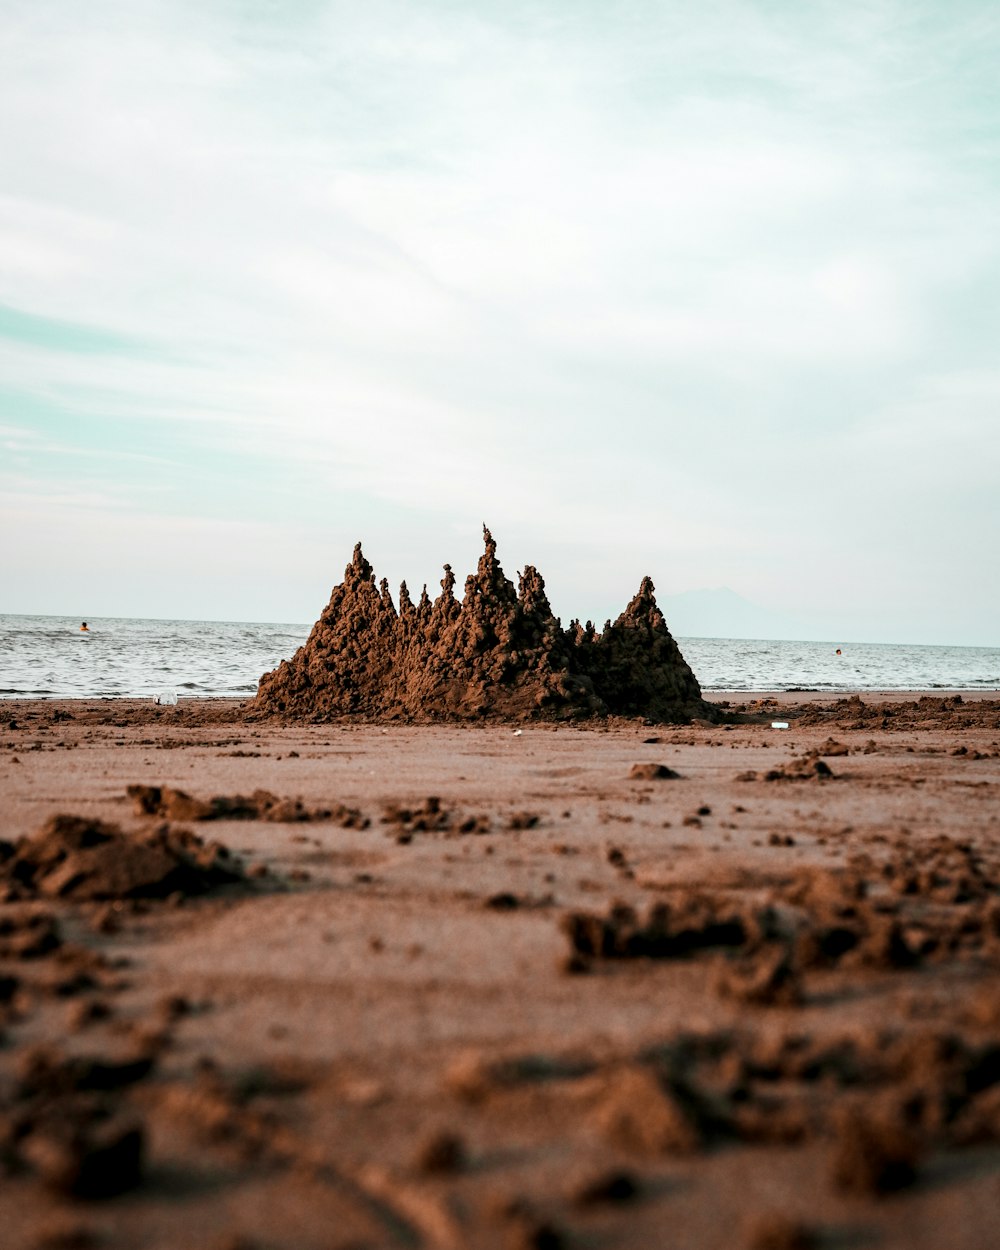 sand castle on seashore during daytime